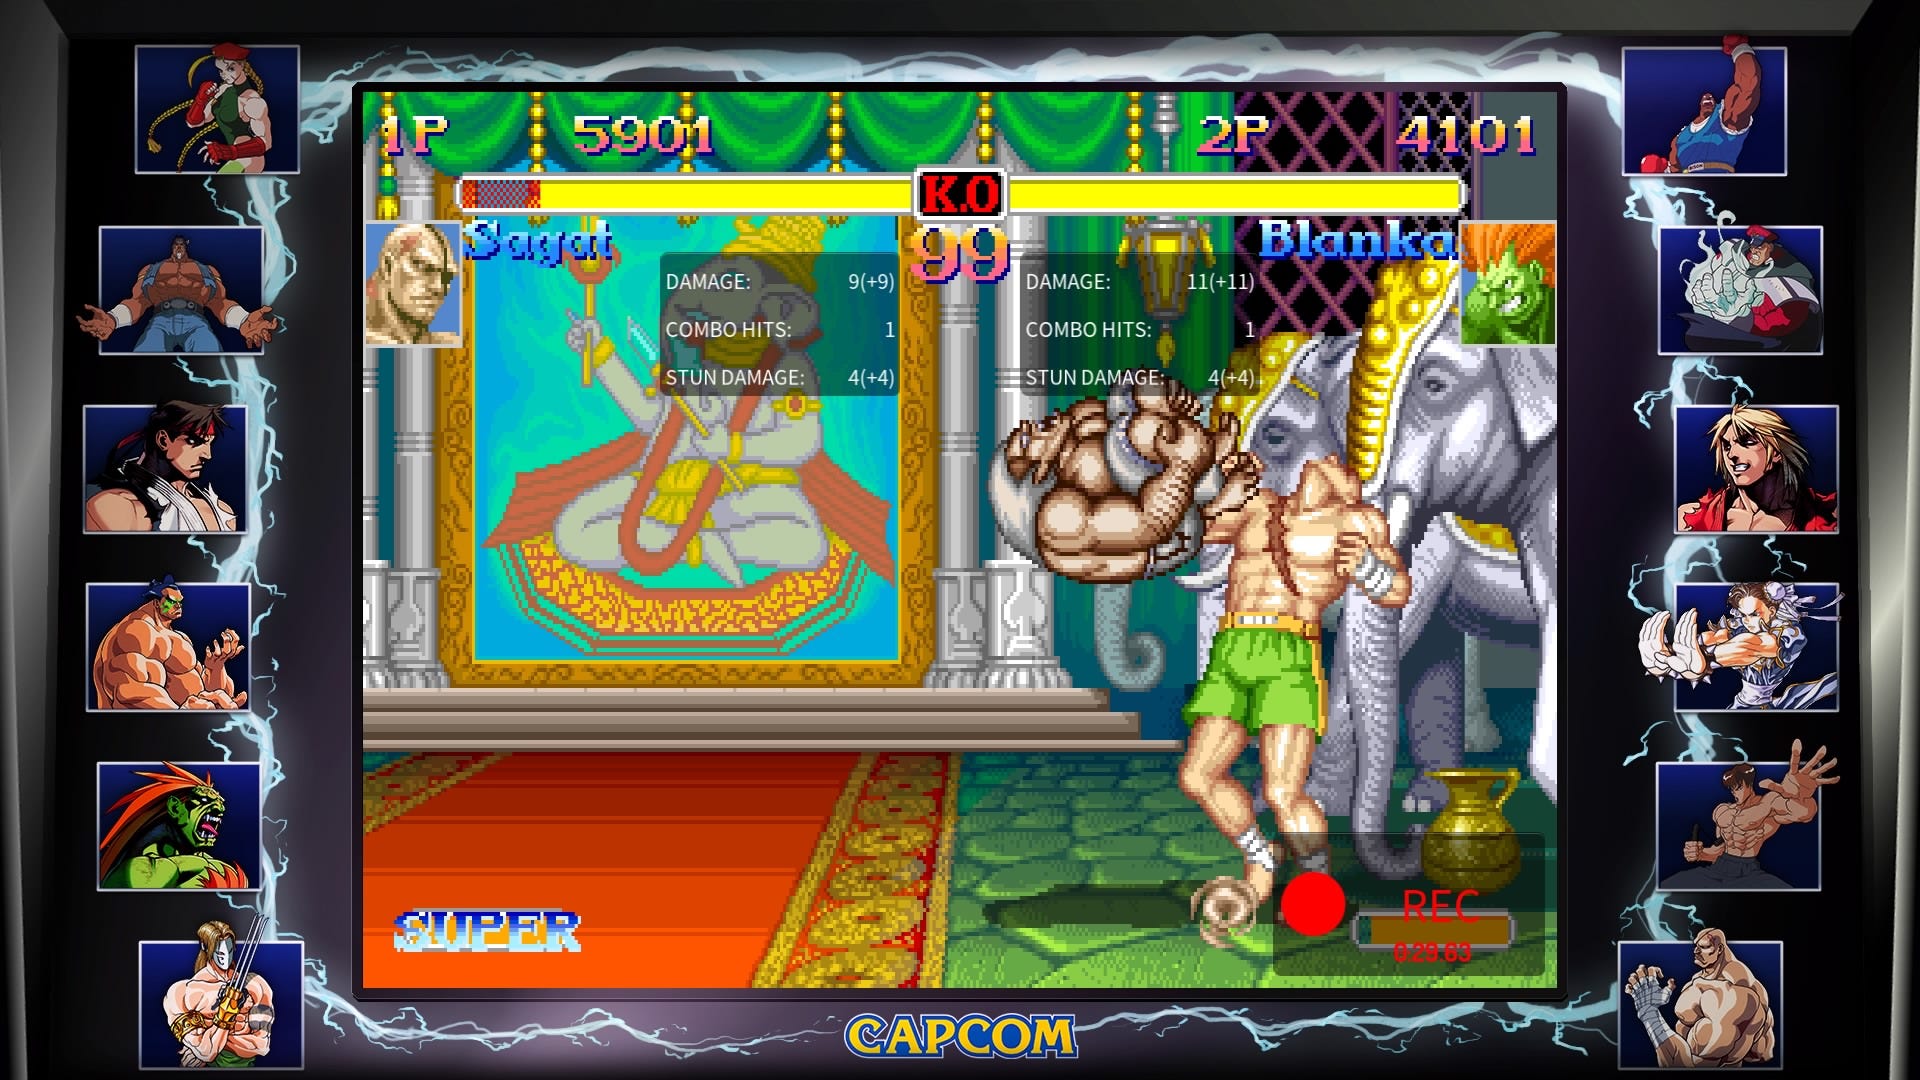 Análise: Street Fighter 30th Anniversary Collection (Multi) relembra os  bons tempos dos fliperamas - GameBlast